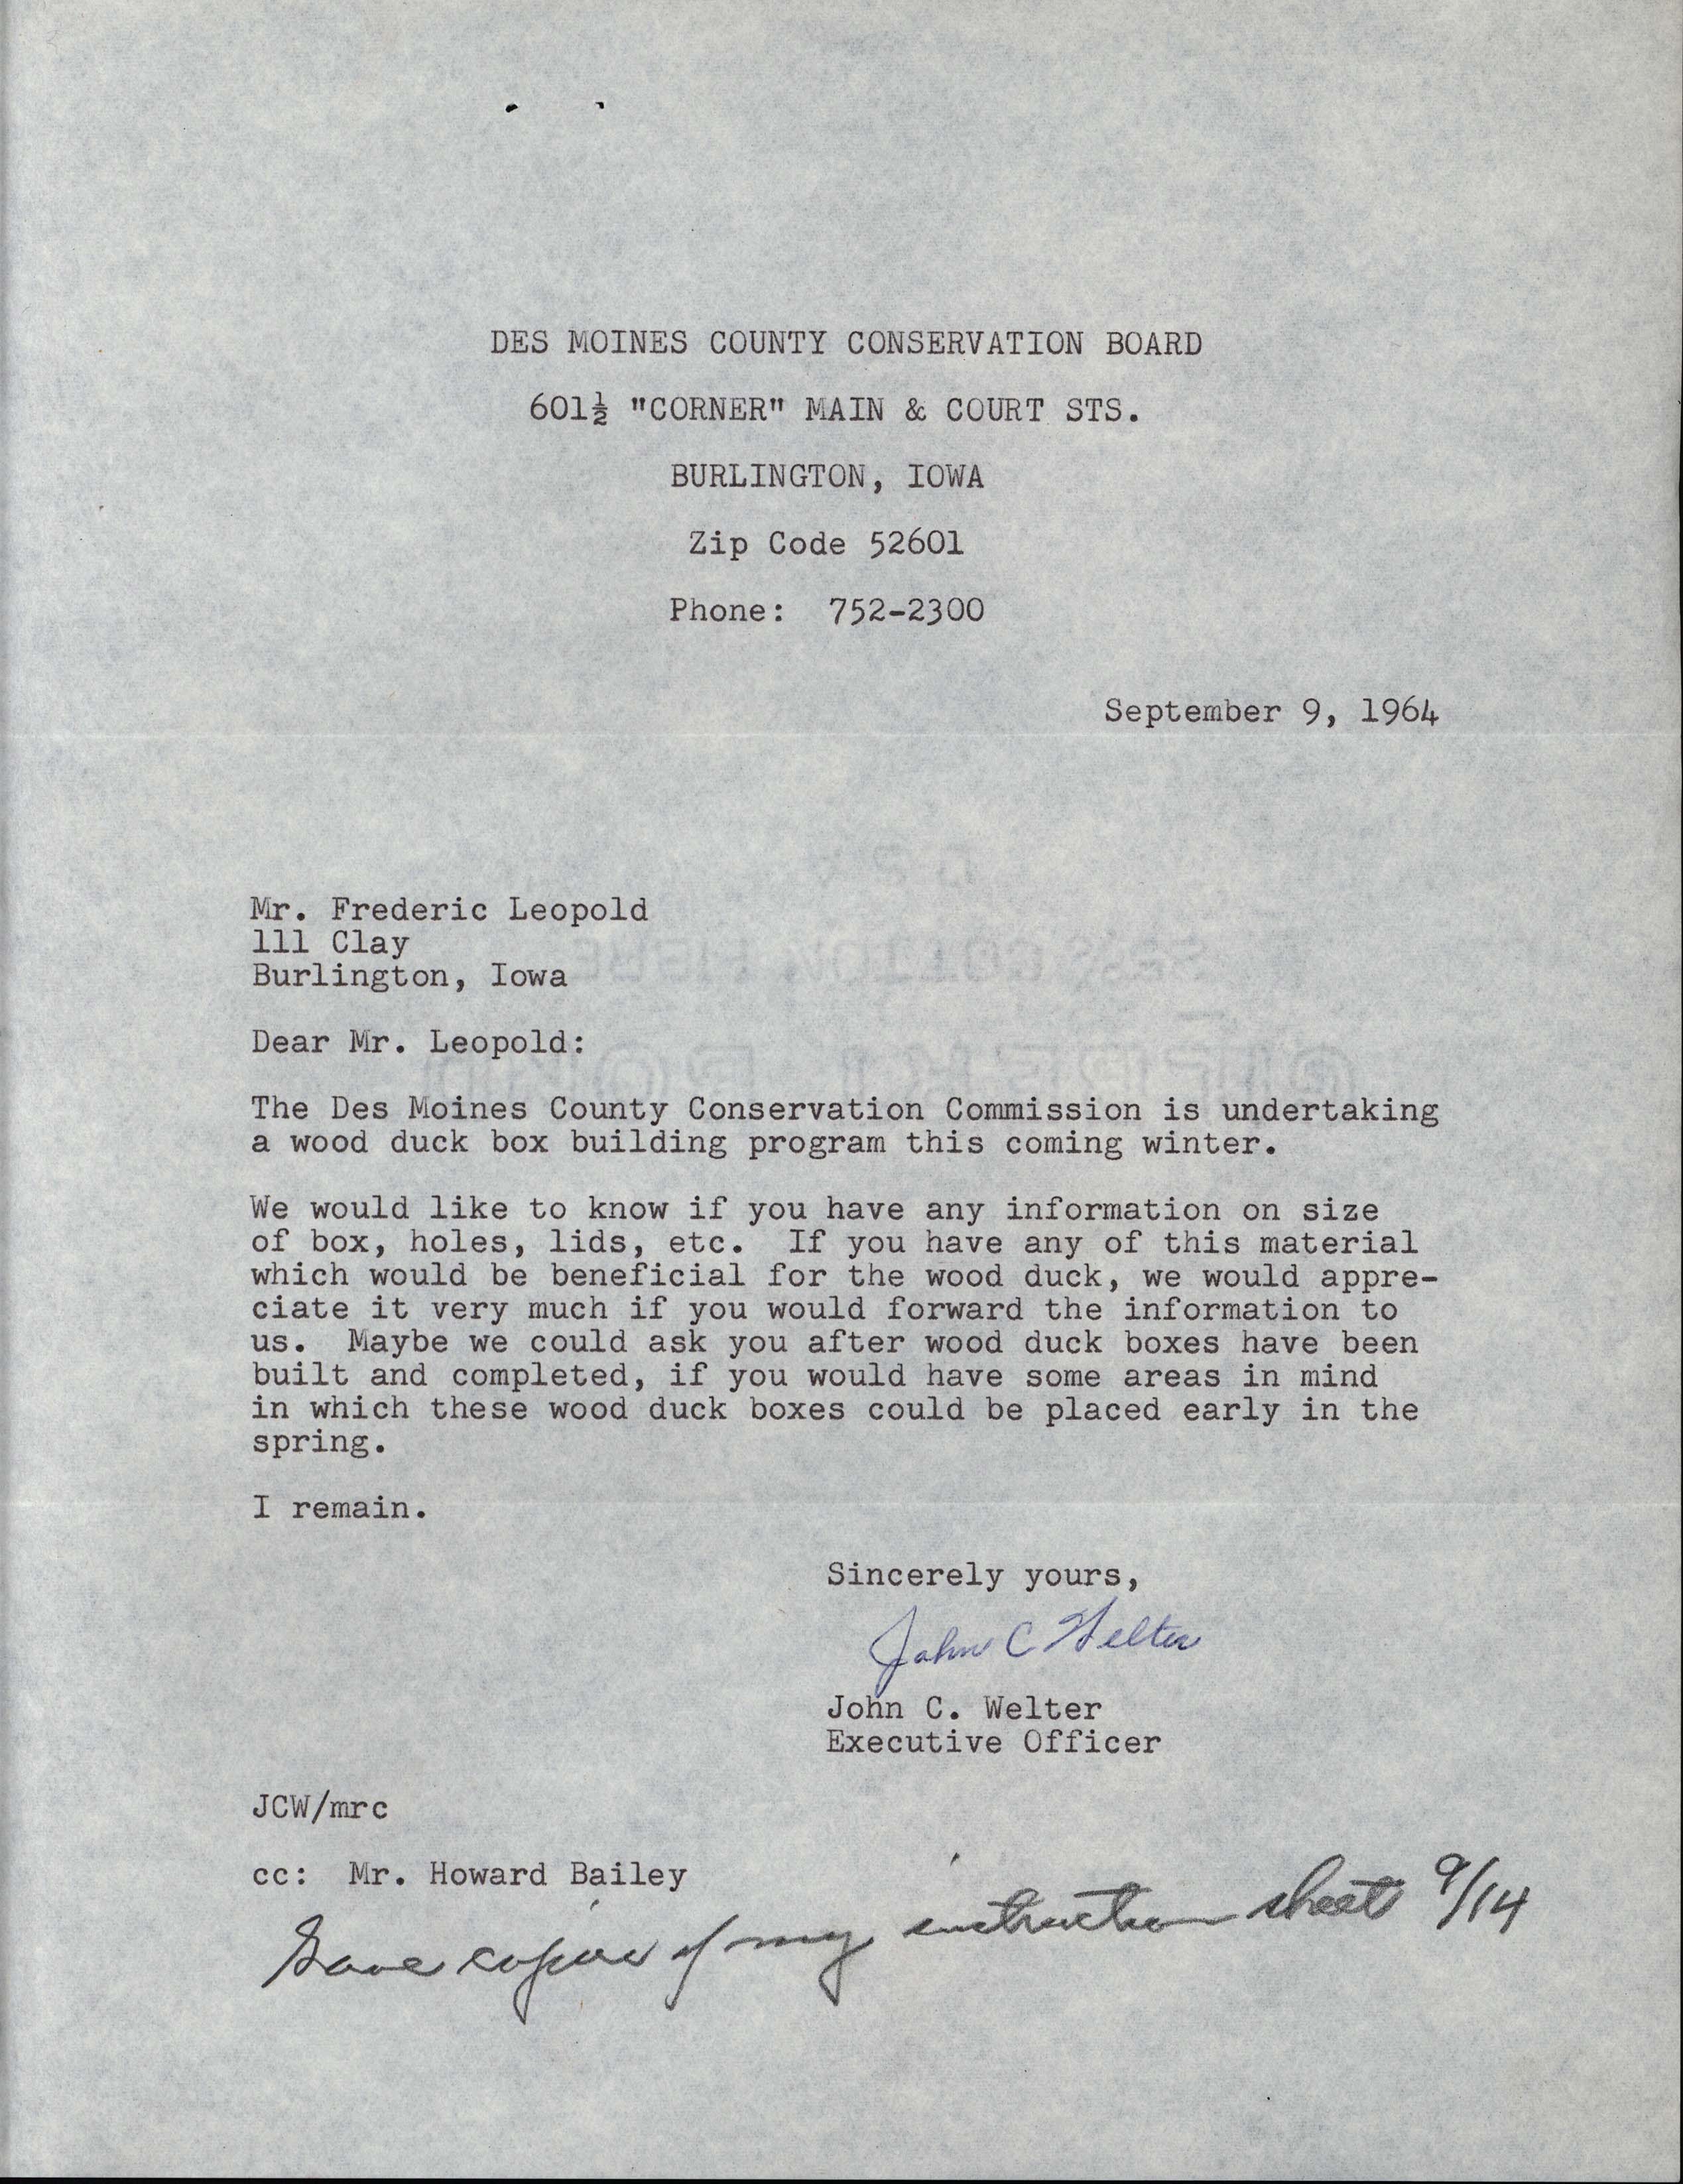 John C. Welter letter to Frederic Leopold regarding Wood Duck house information, September 9, 1964